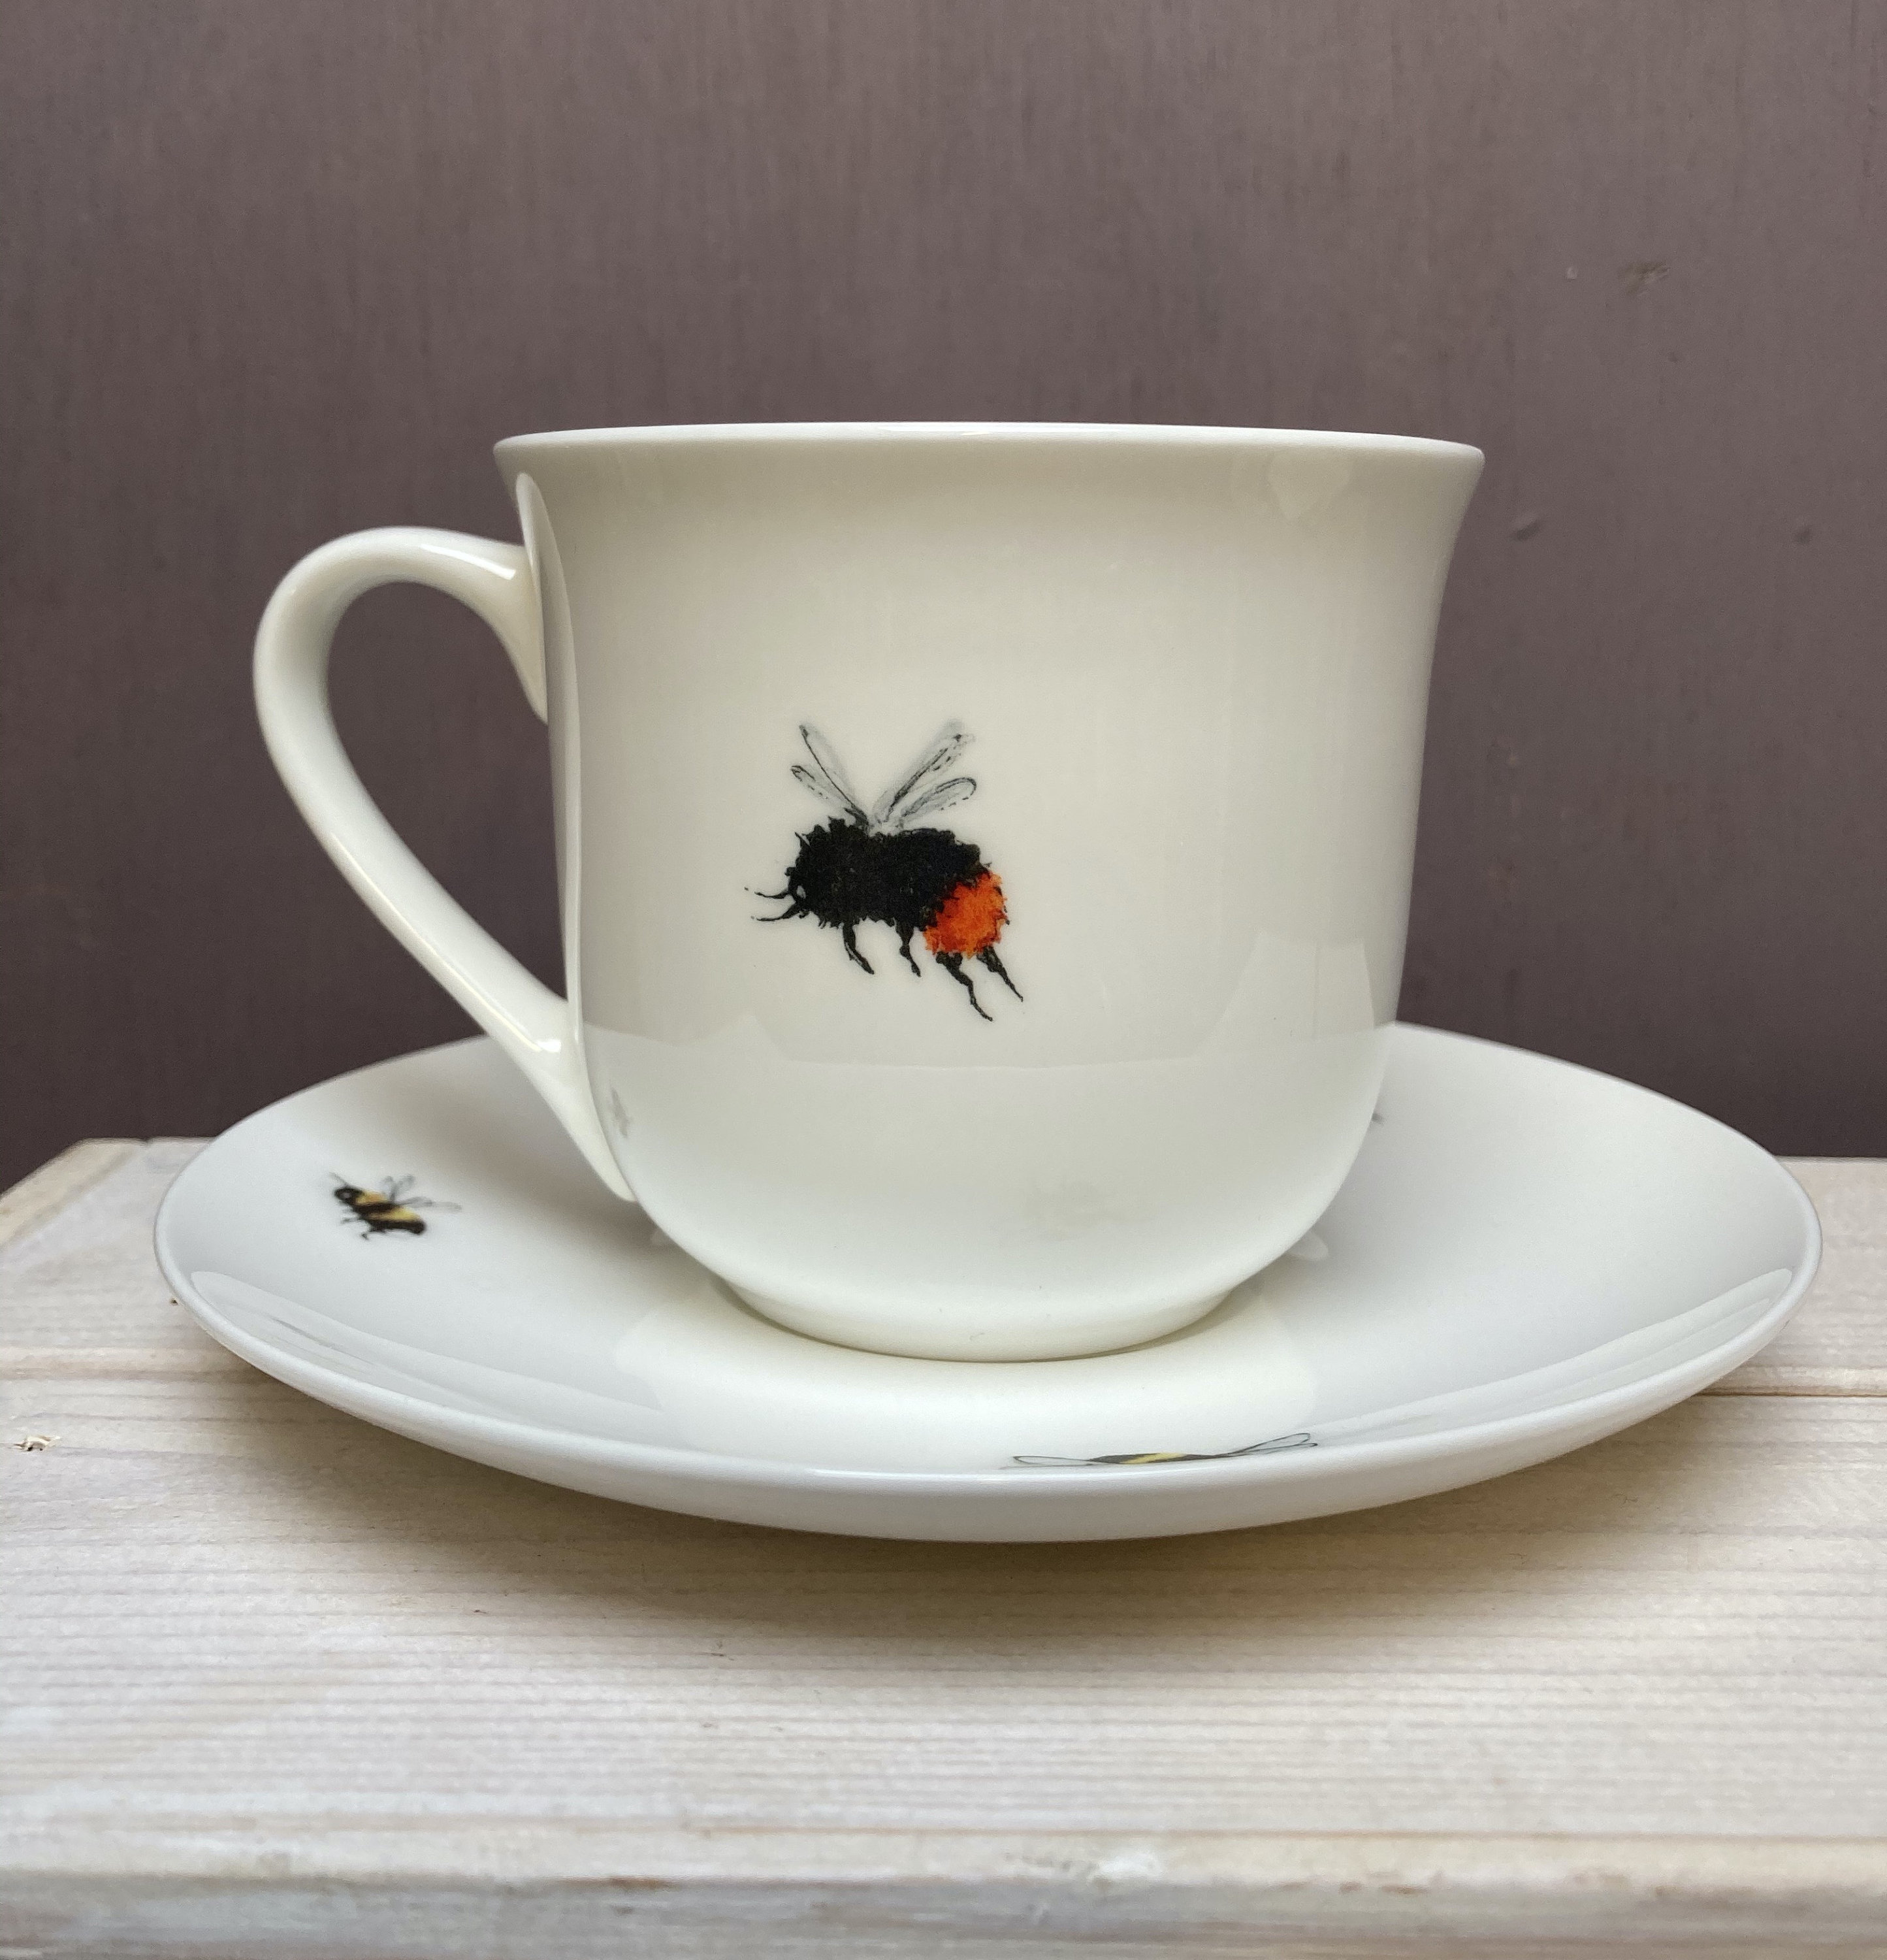 Buy BunyBee Tableware Serving Tea and Coffee Cup Saucer Set Pack